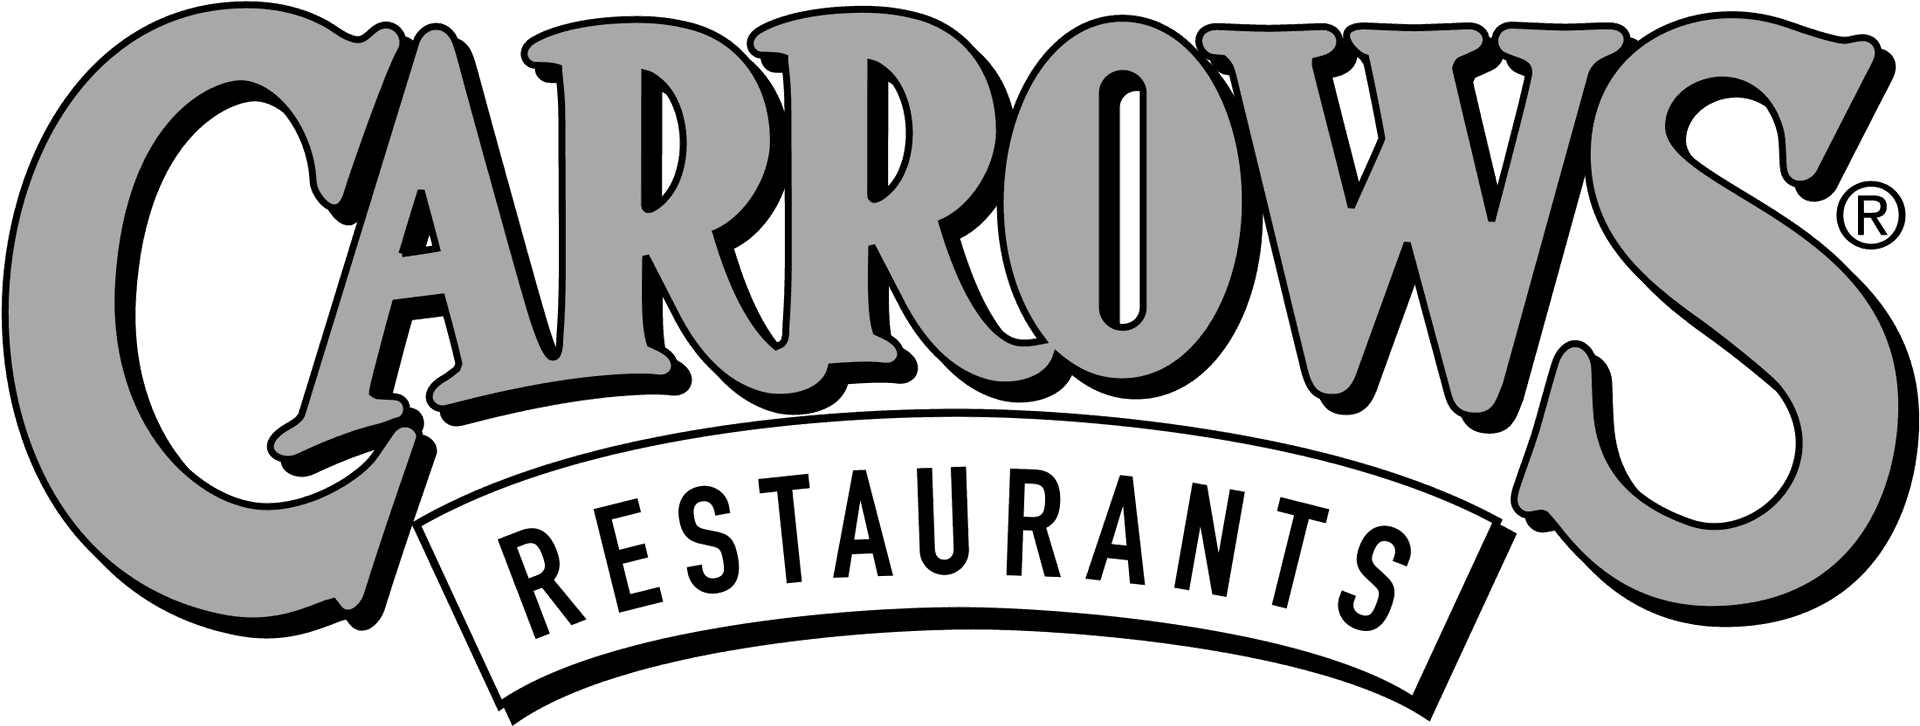 Carrows Restaurants Logo PNG